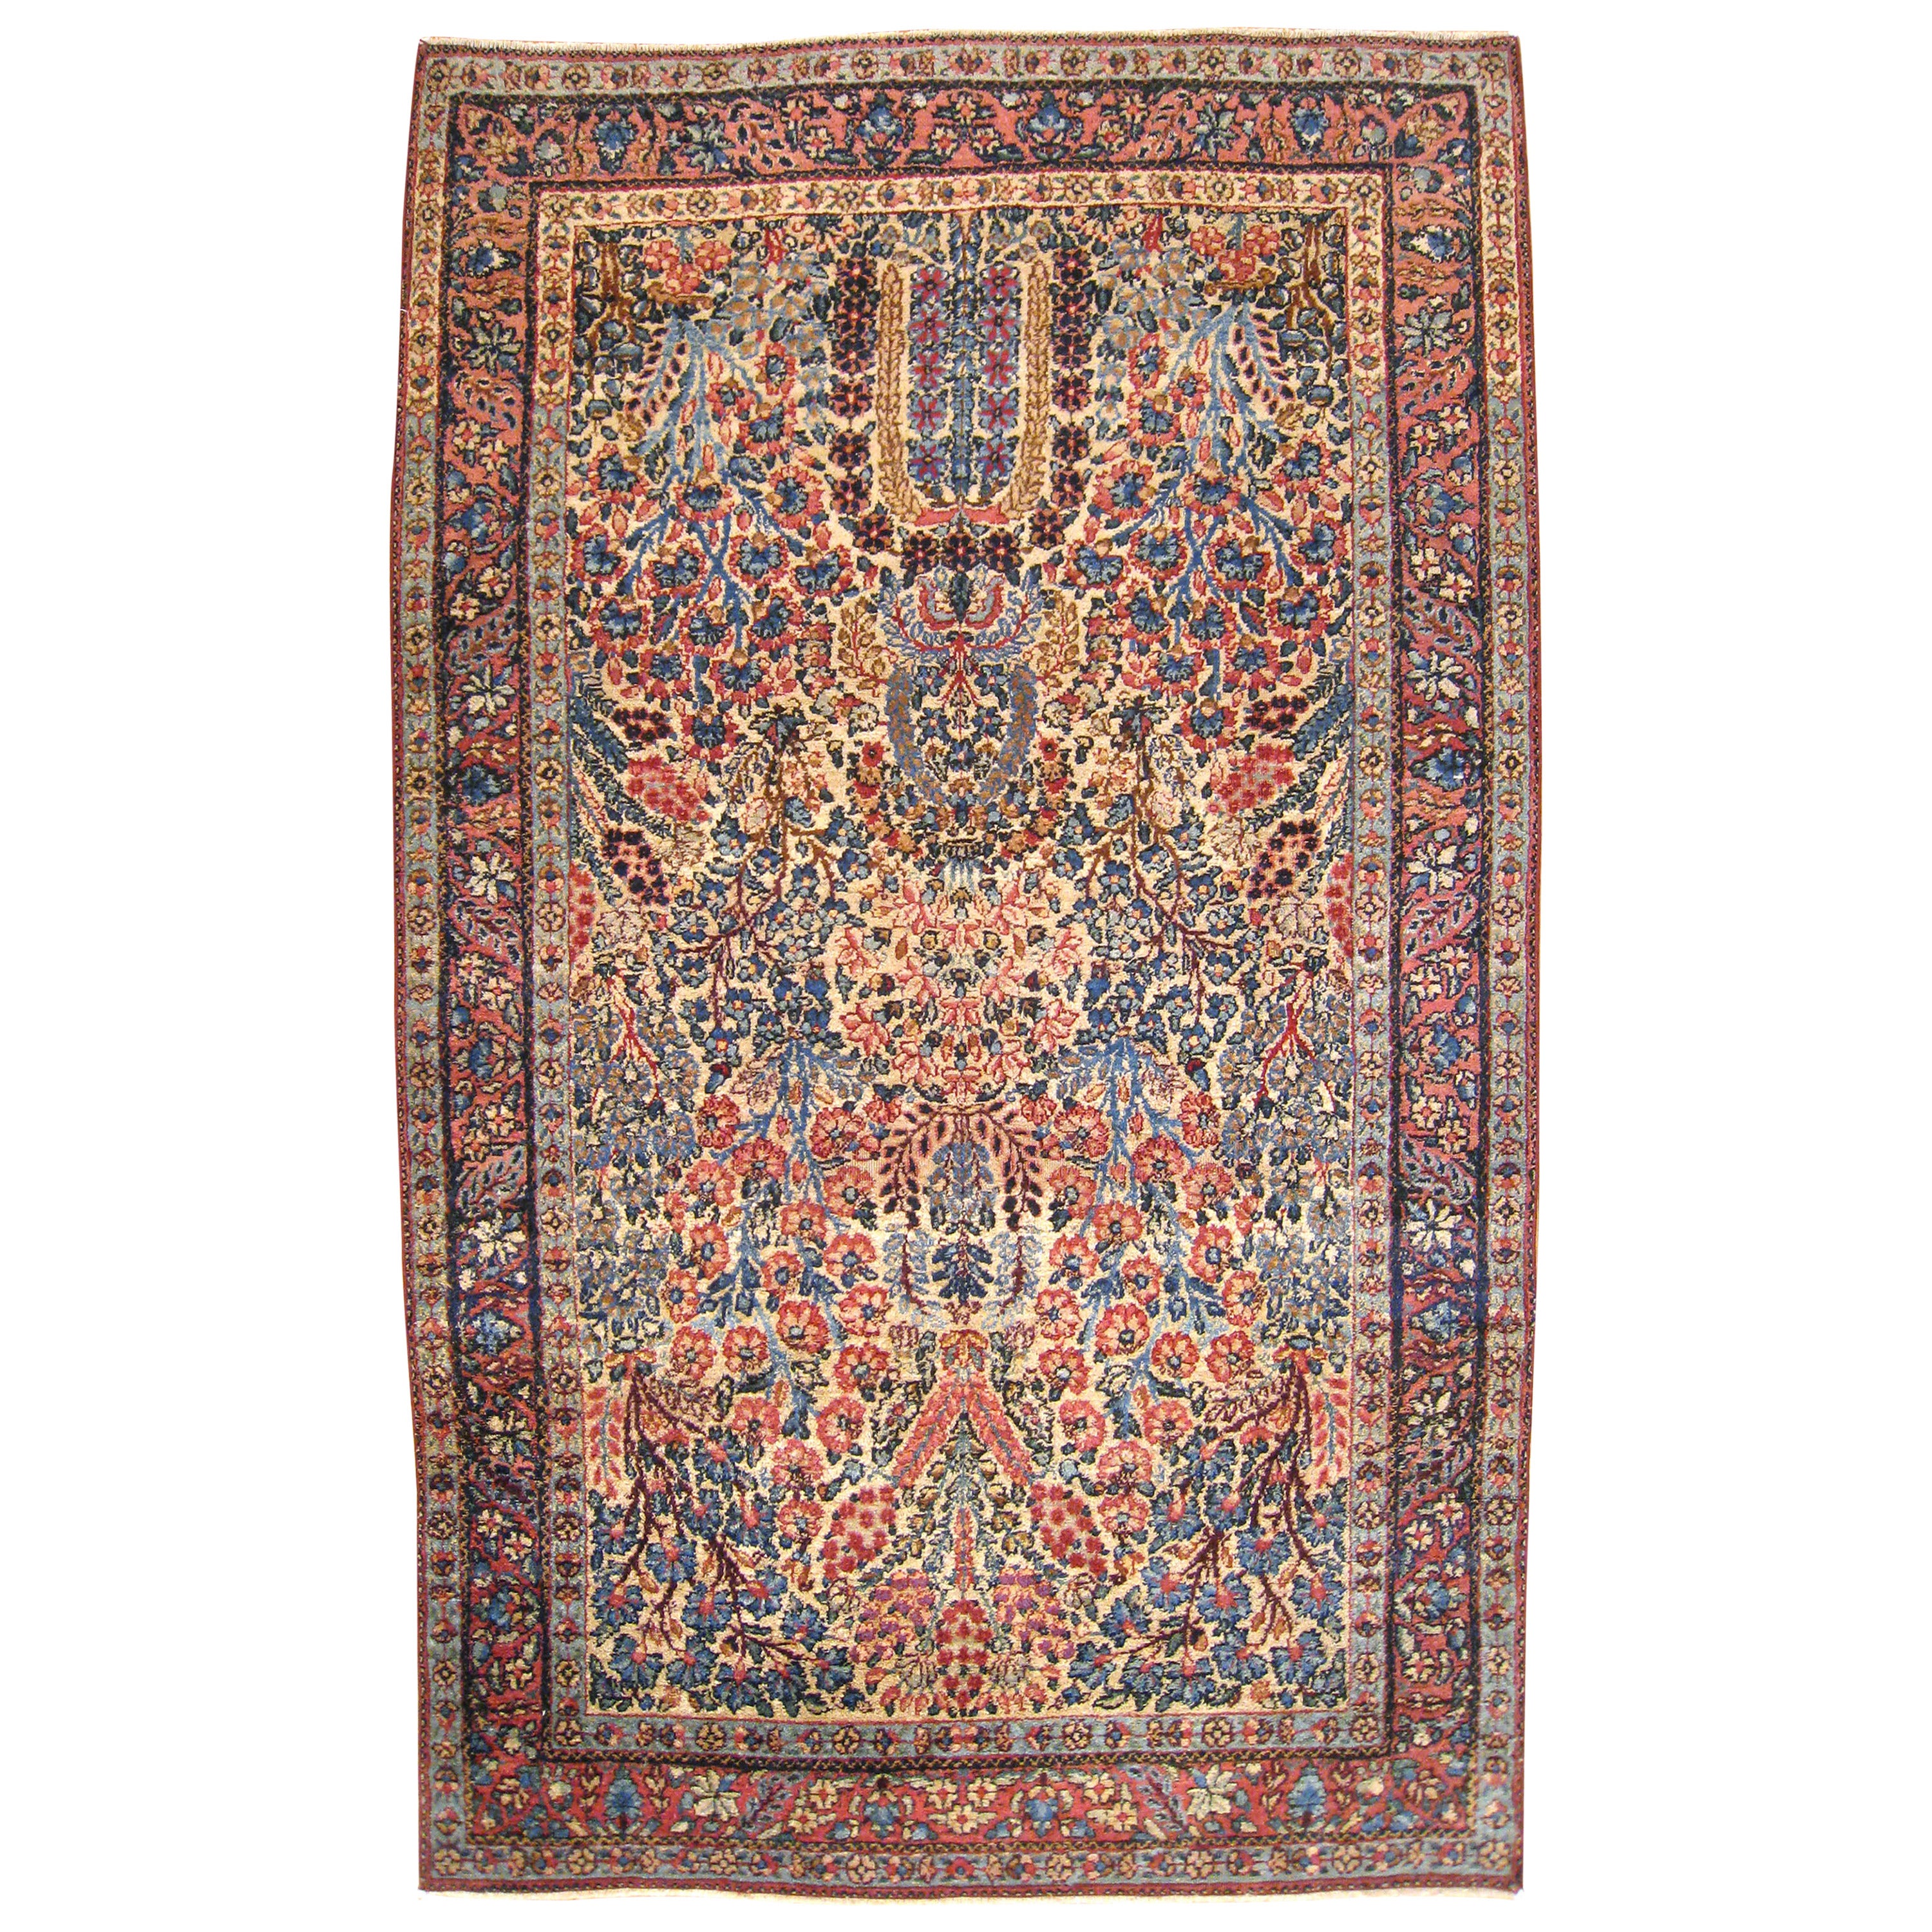 Antique Persian Kerman Oriental Rug, circa 1900